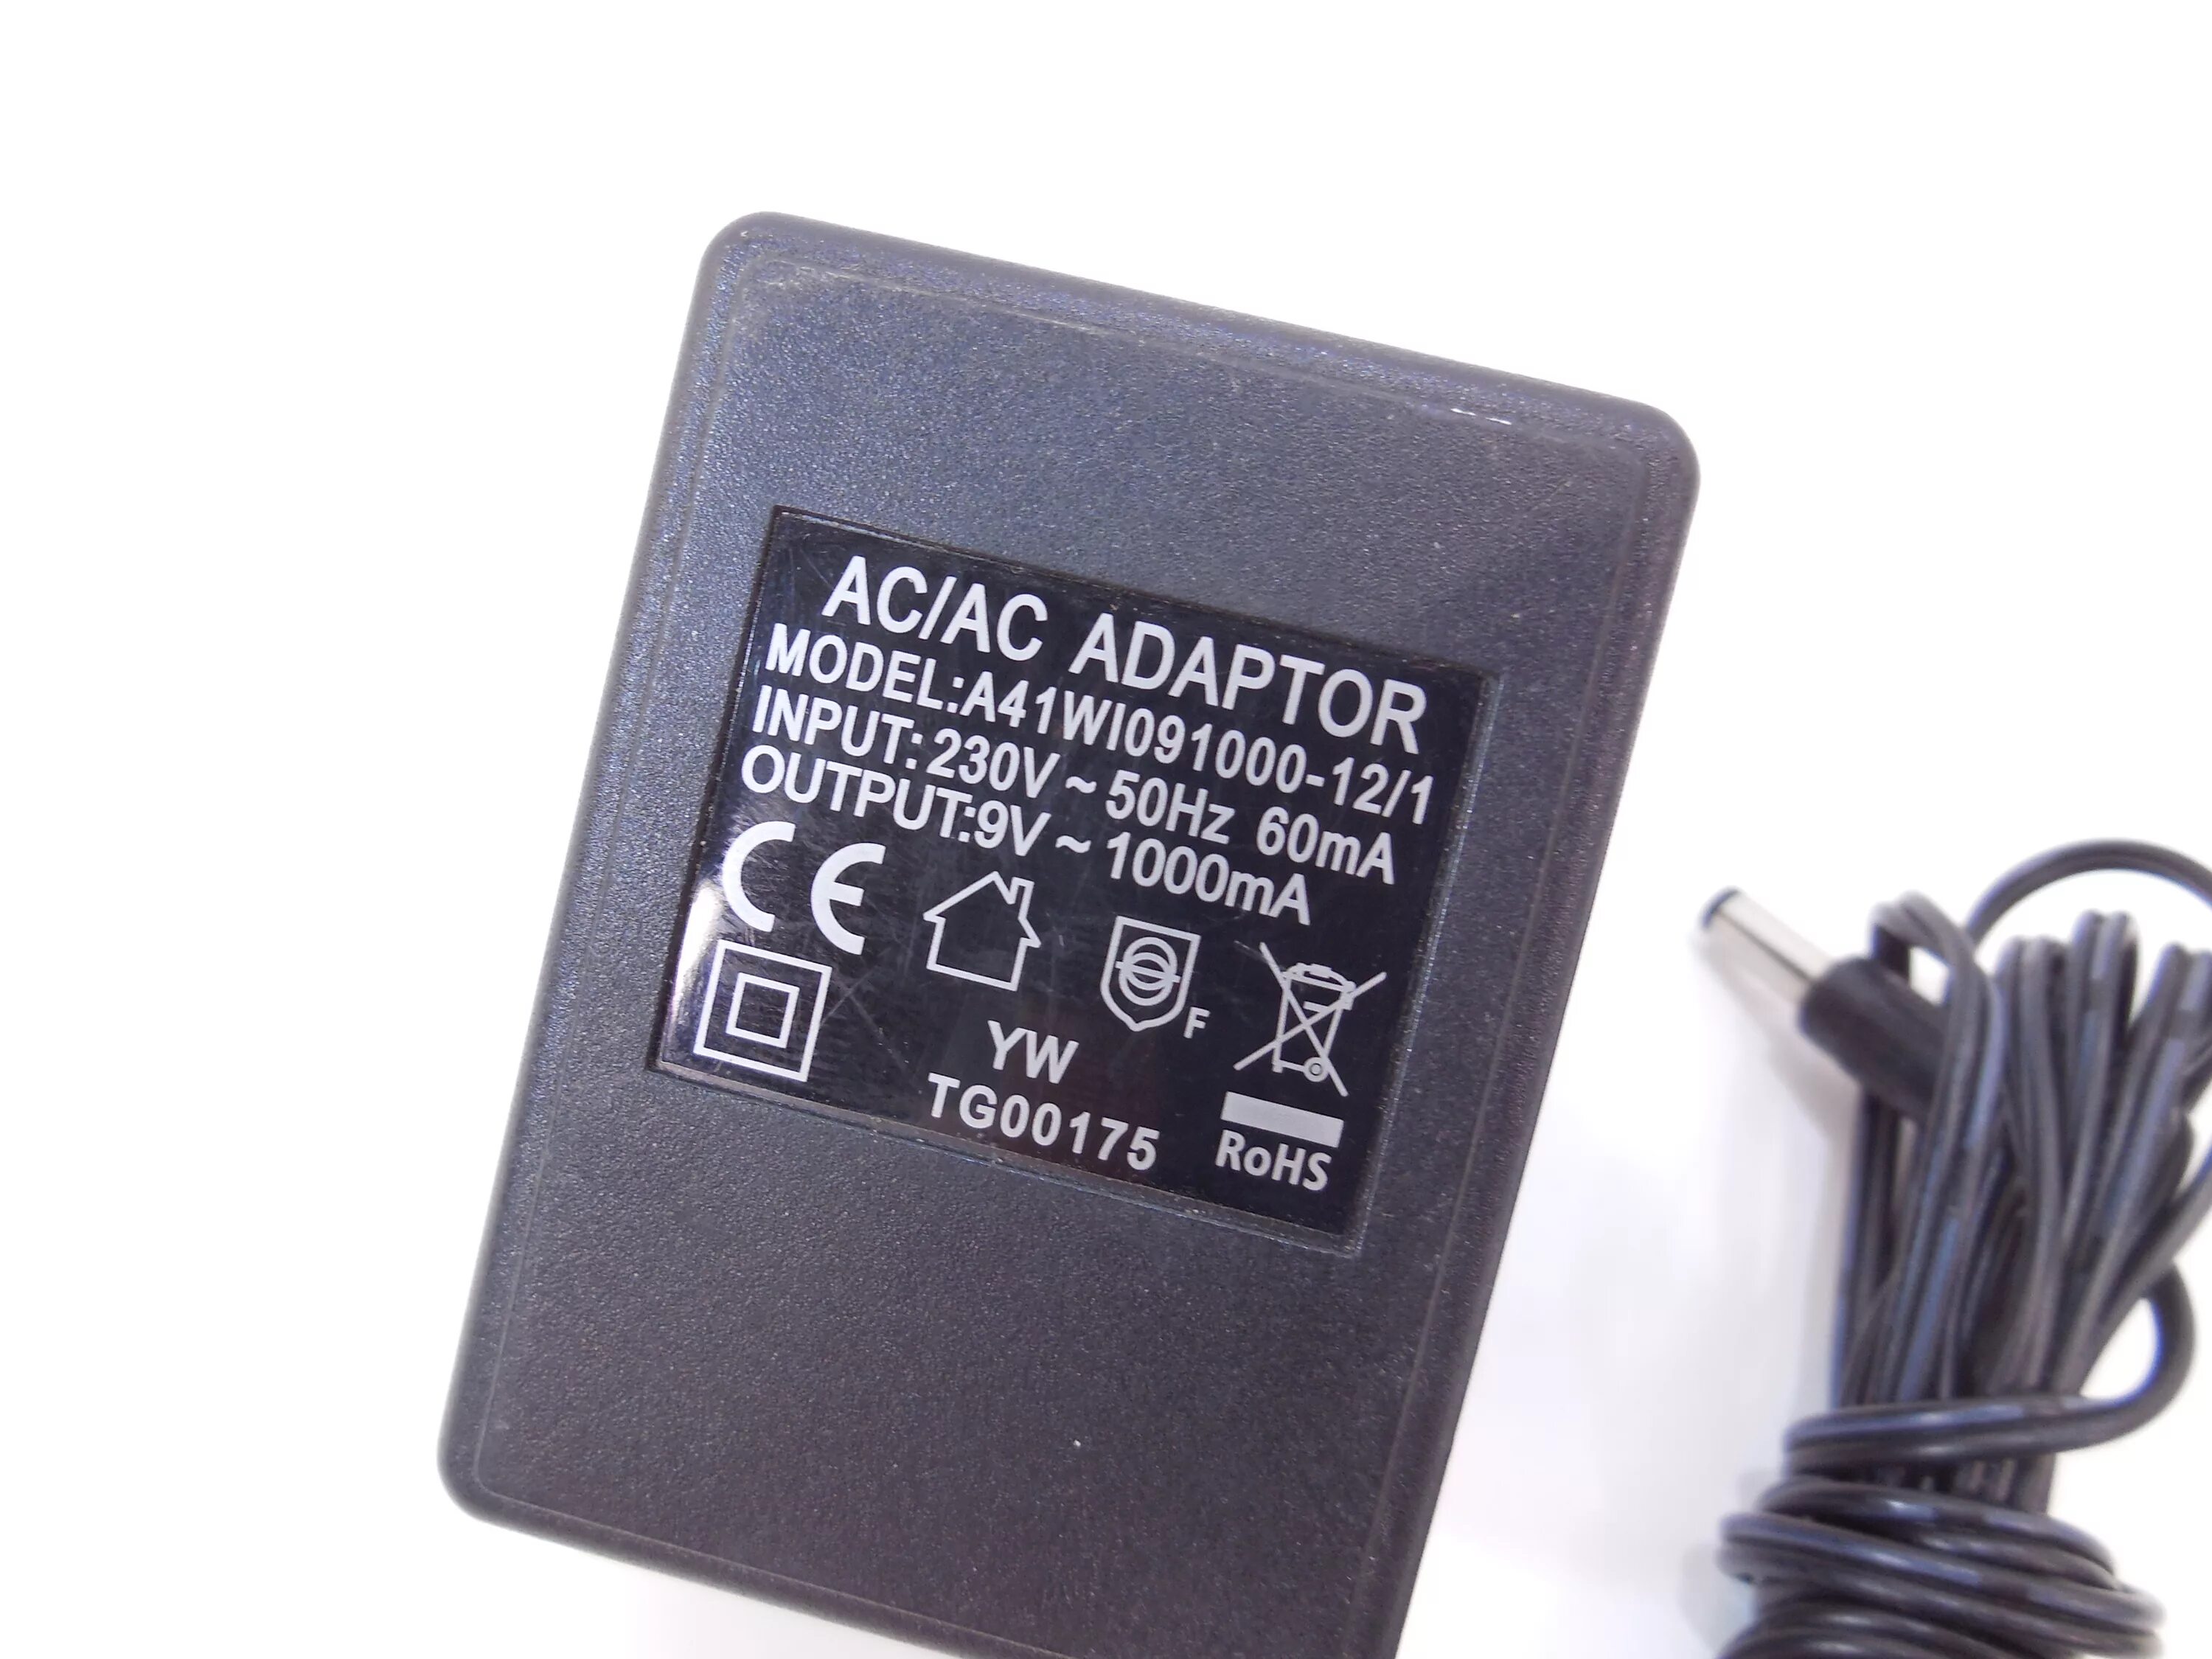 Блок питания output AC 9v 500ma. AC/AC Adaptor output 12v Trio. Блок питания 9v 1a (5.5x2.1). AC /AC Adapter model ac500er 18vx2~500ma. 12v 1000ma